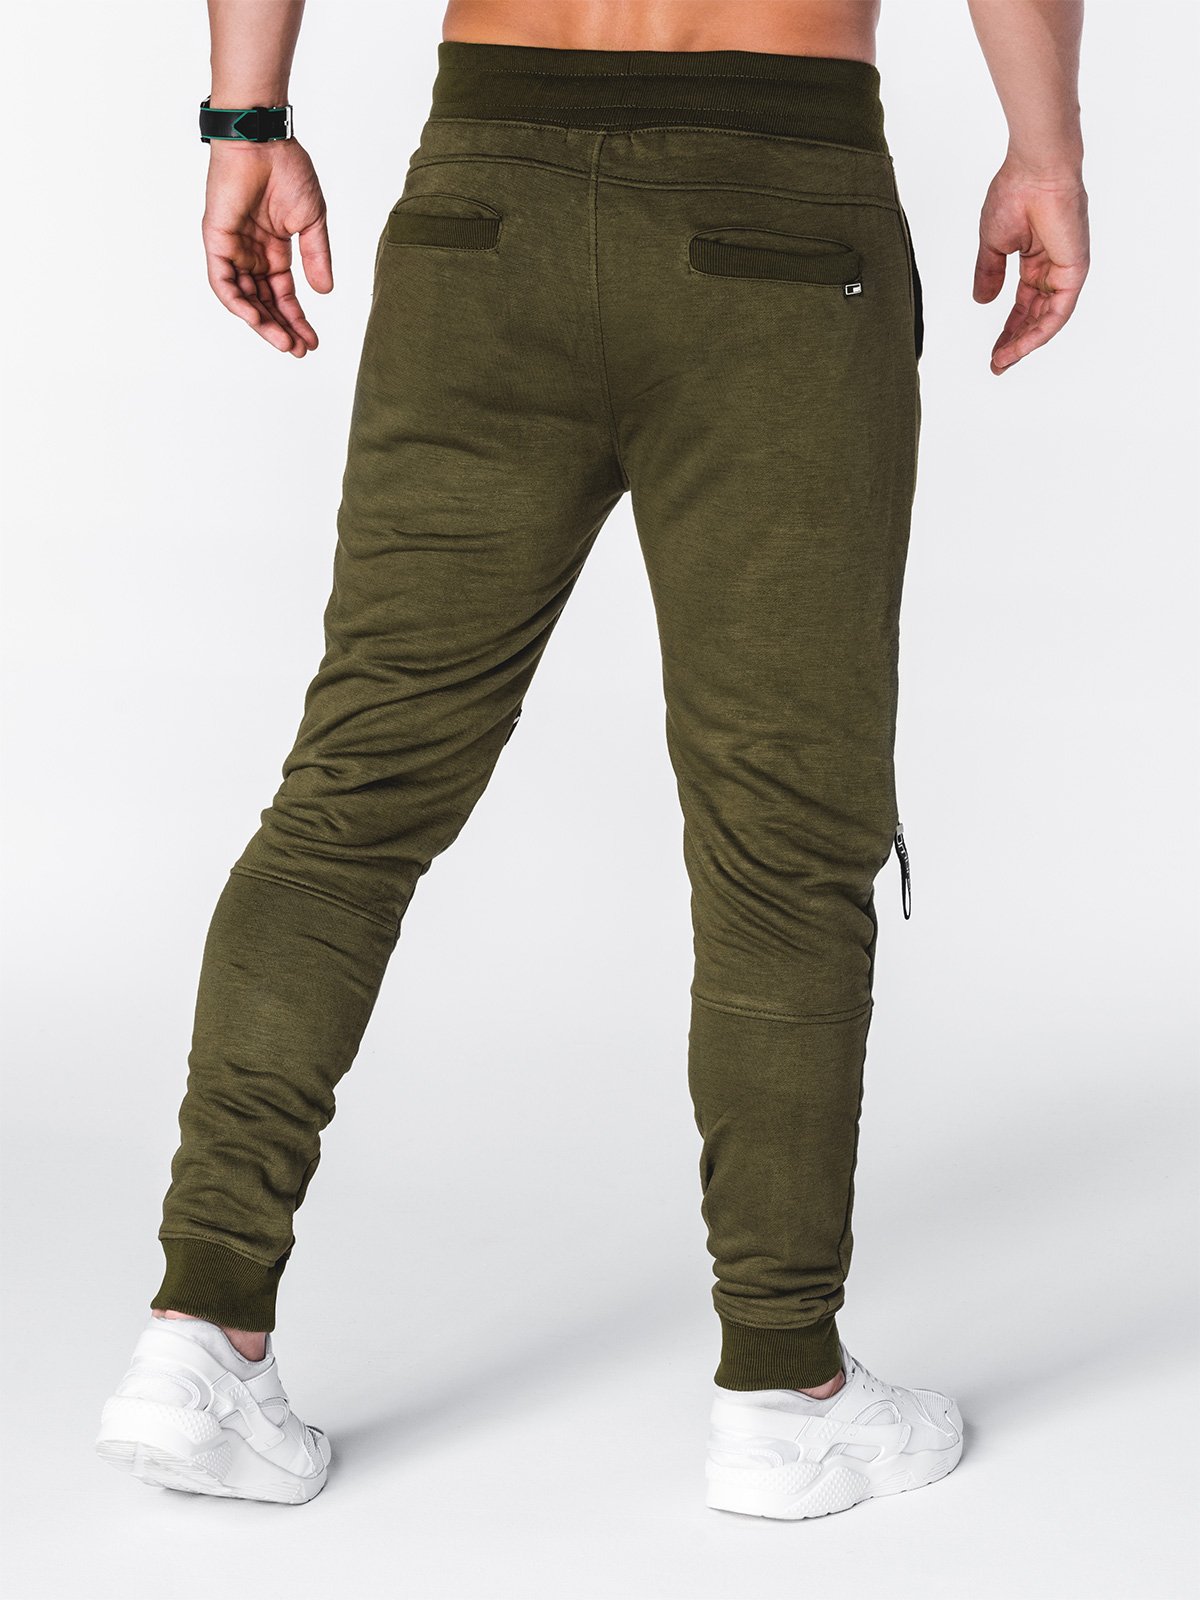 Men's sweatpants P637 - khaki | MODONE wholesale - Clothing For Men